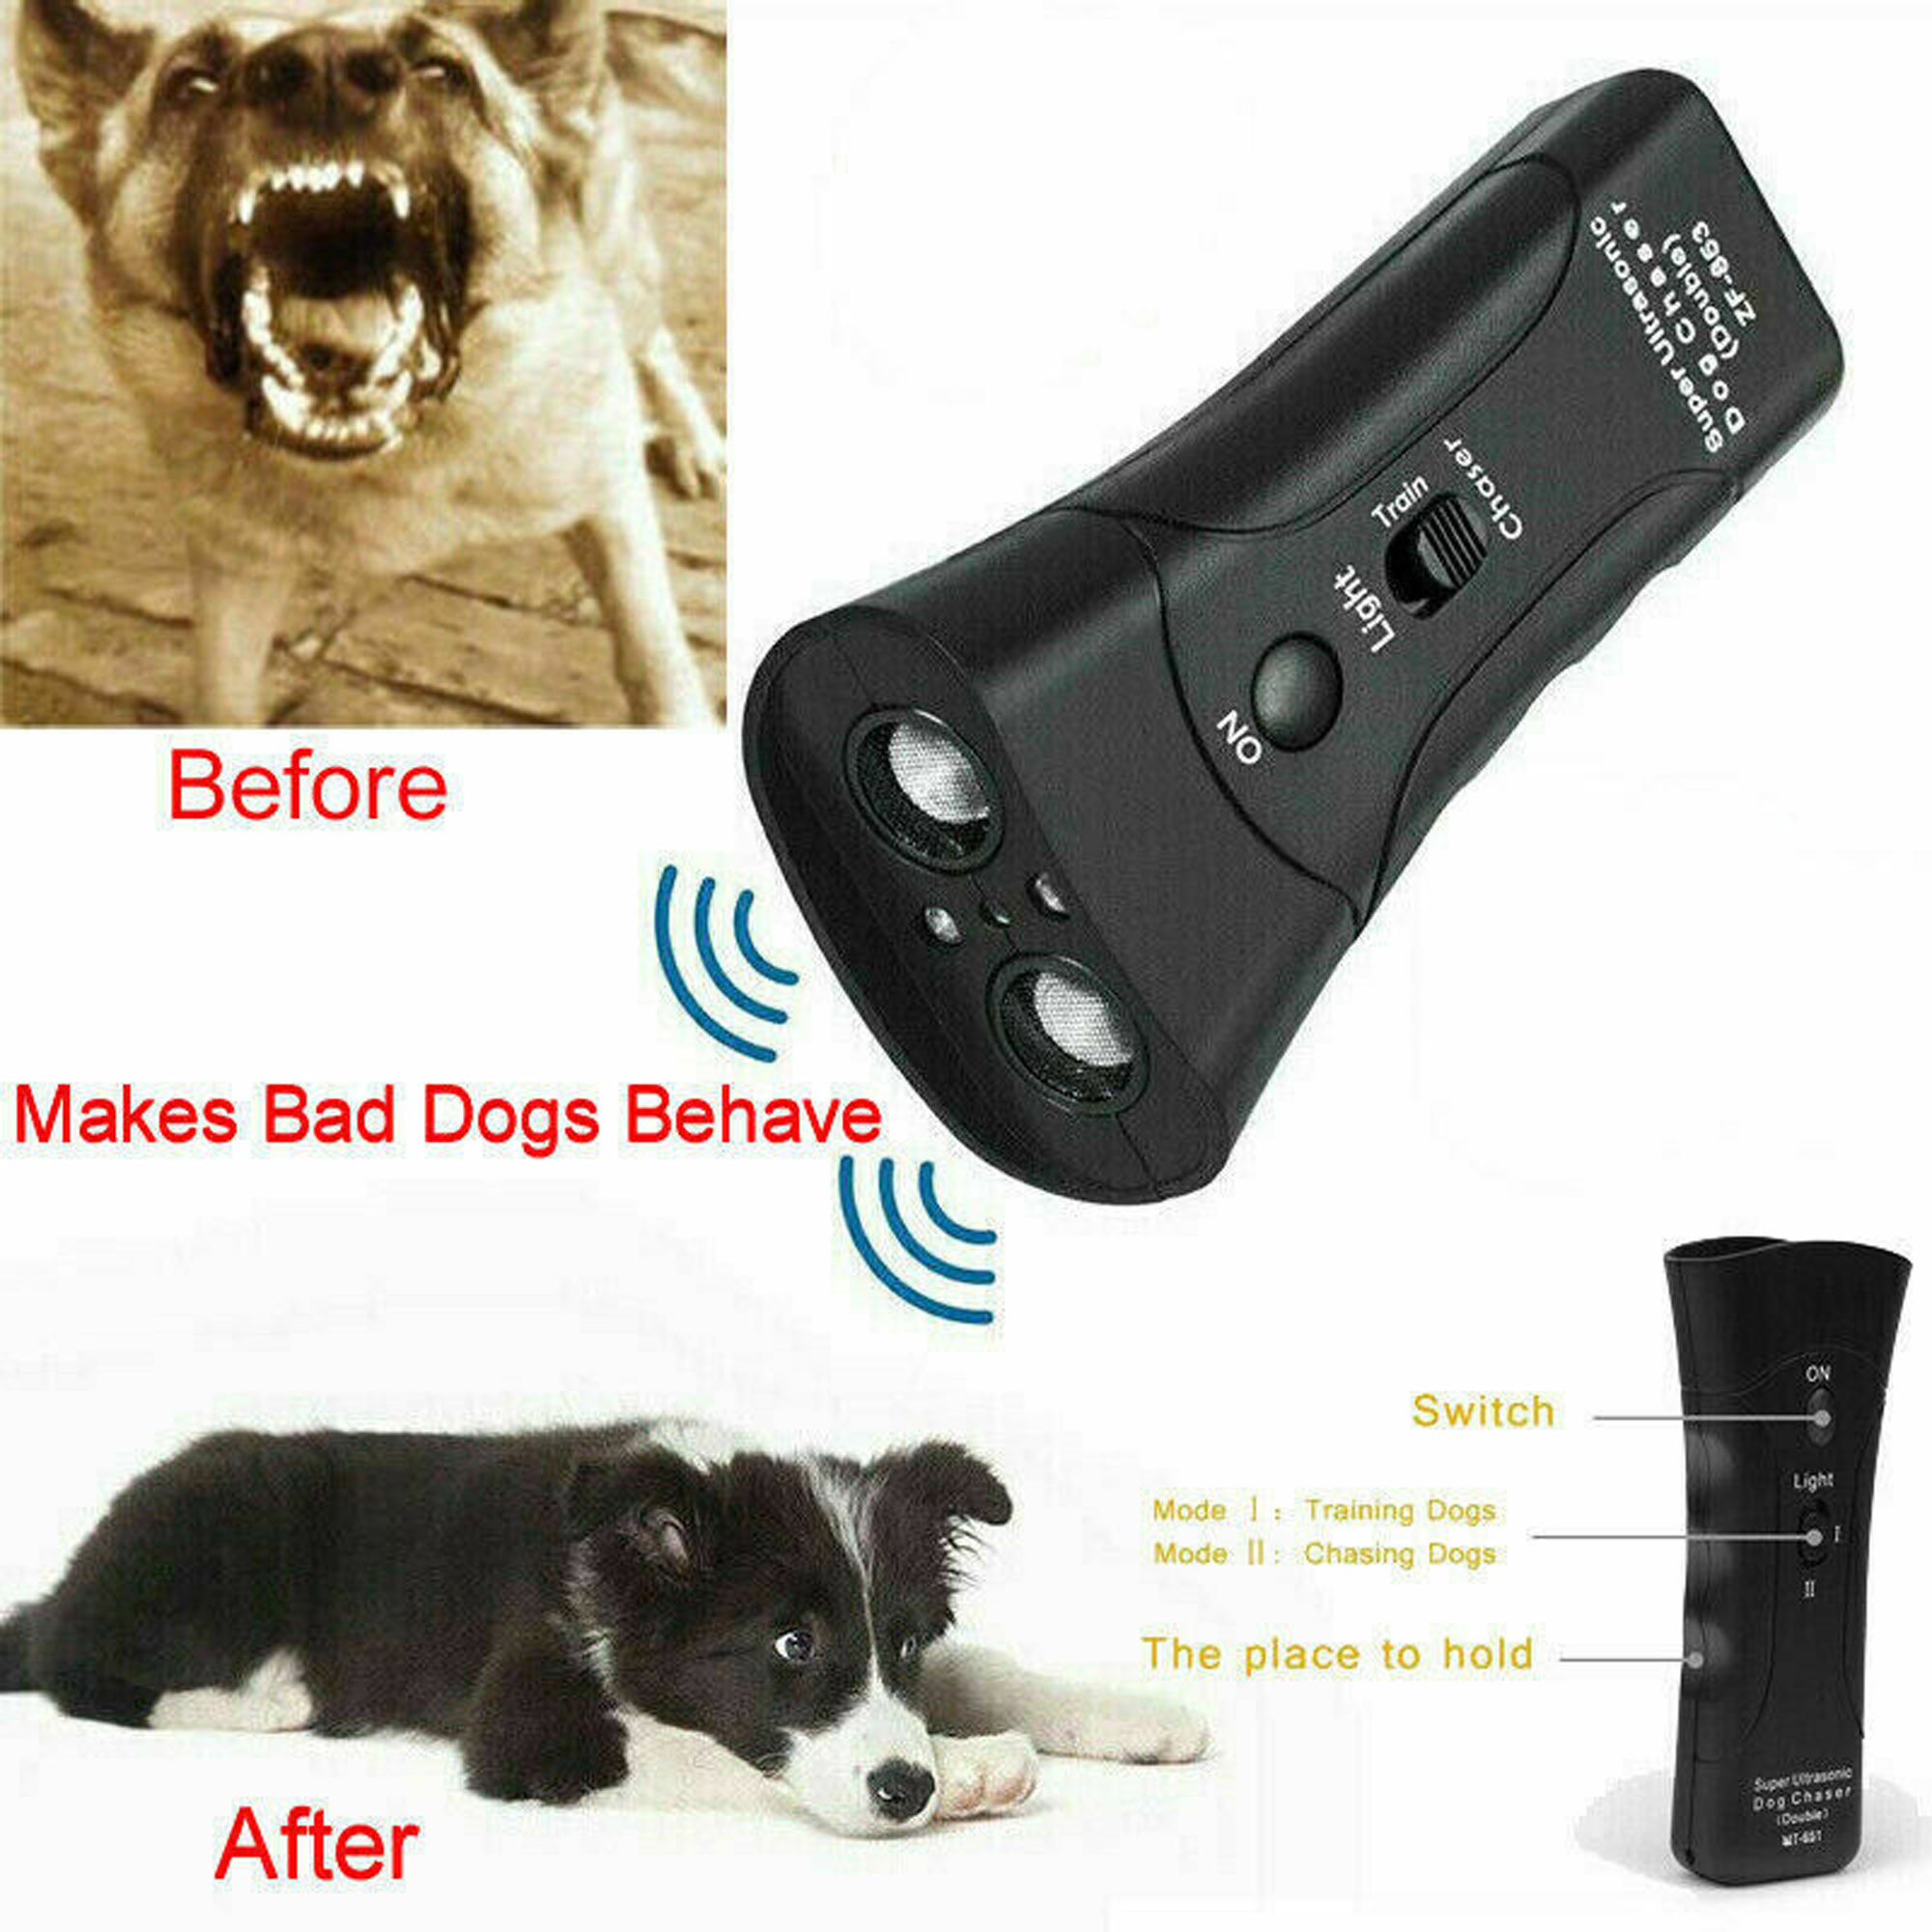 dog training devices